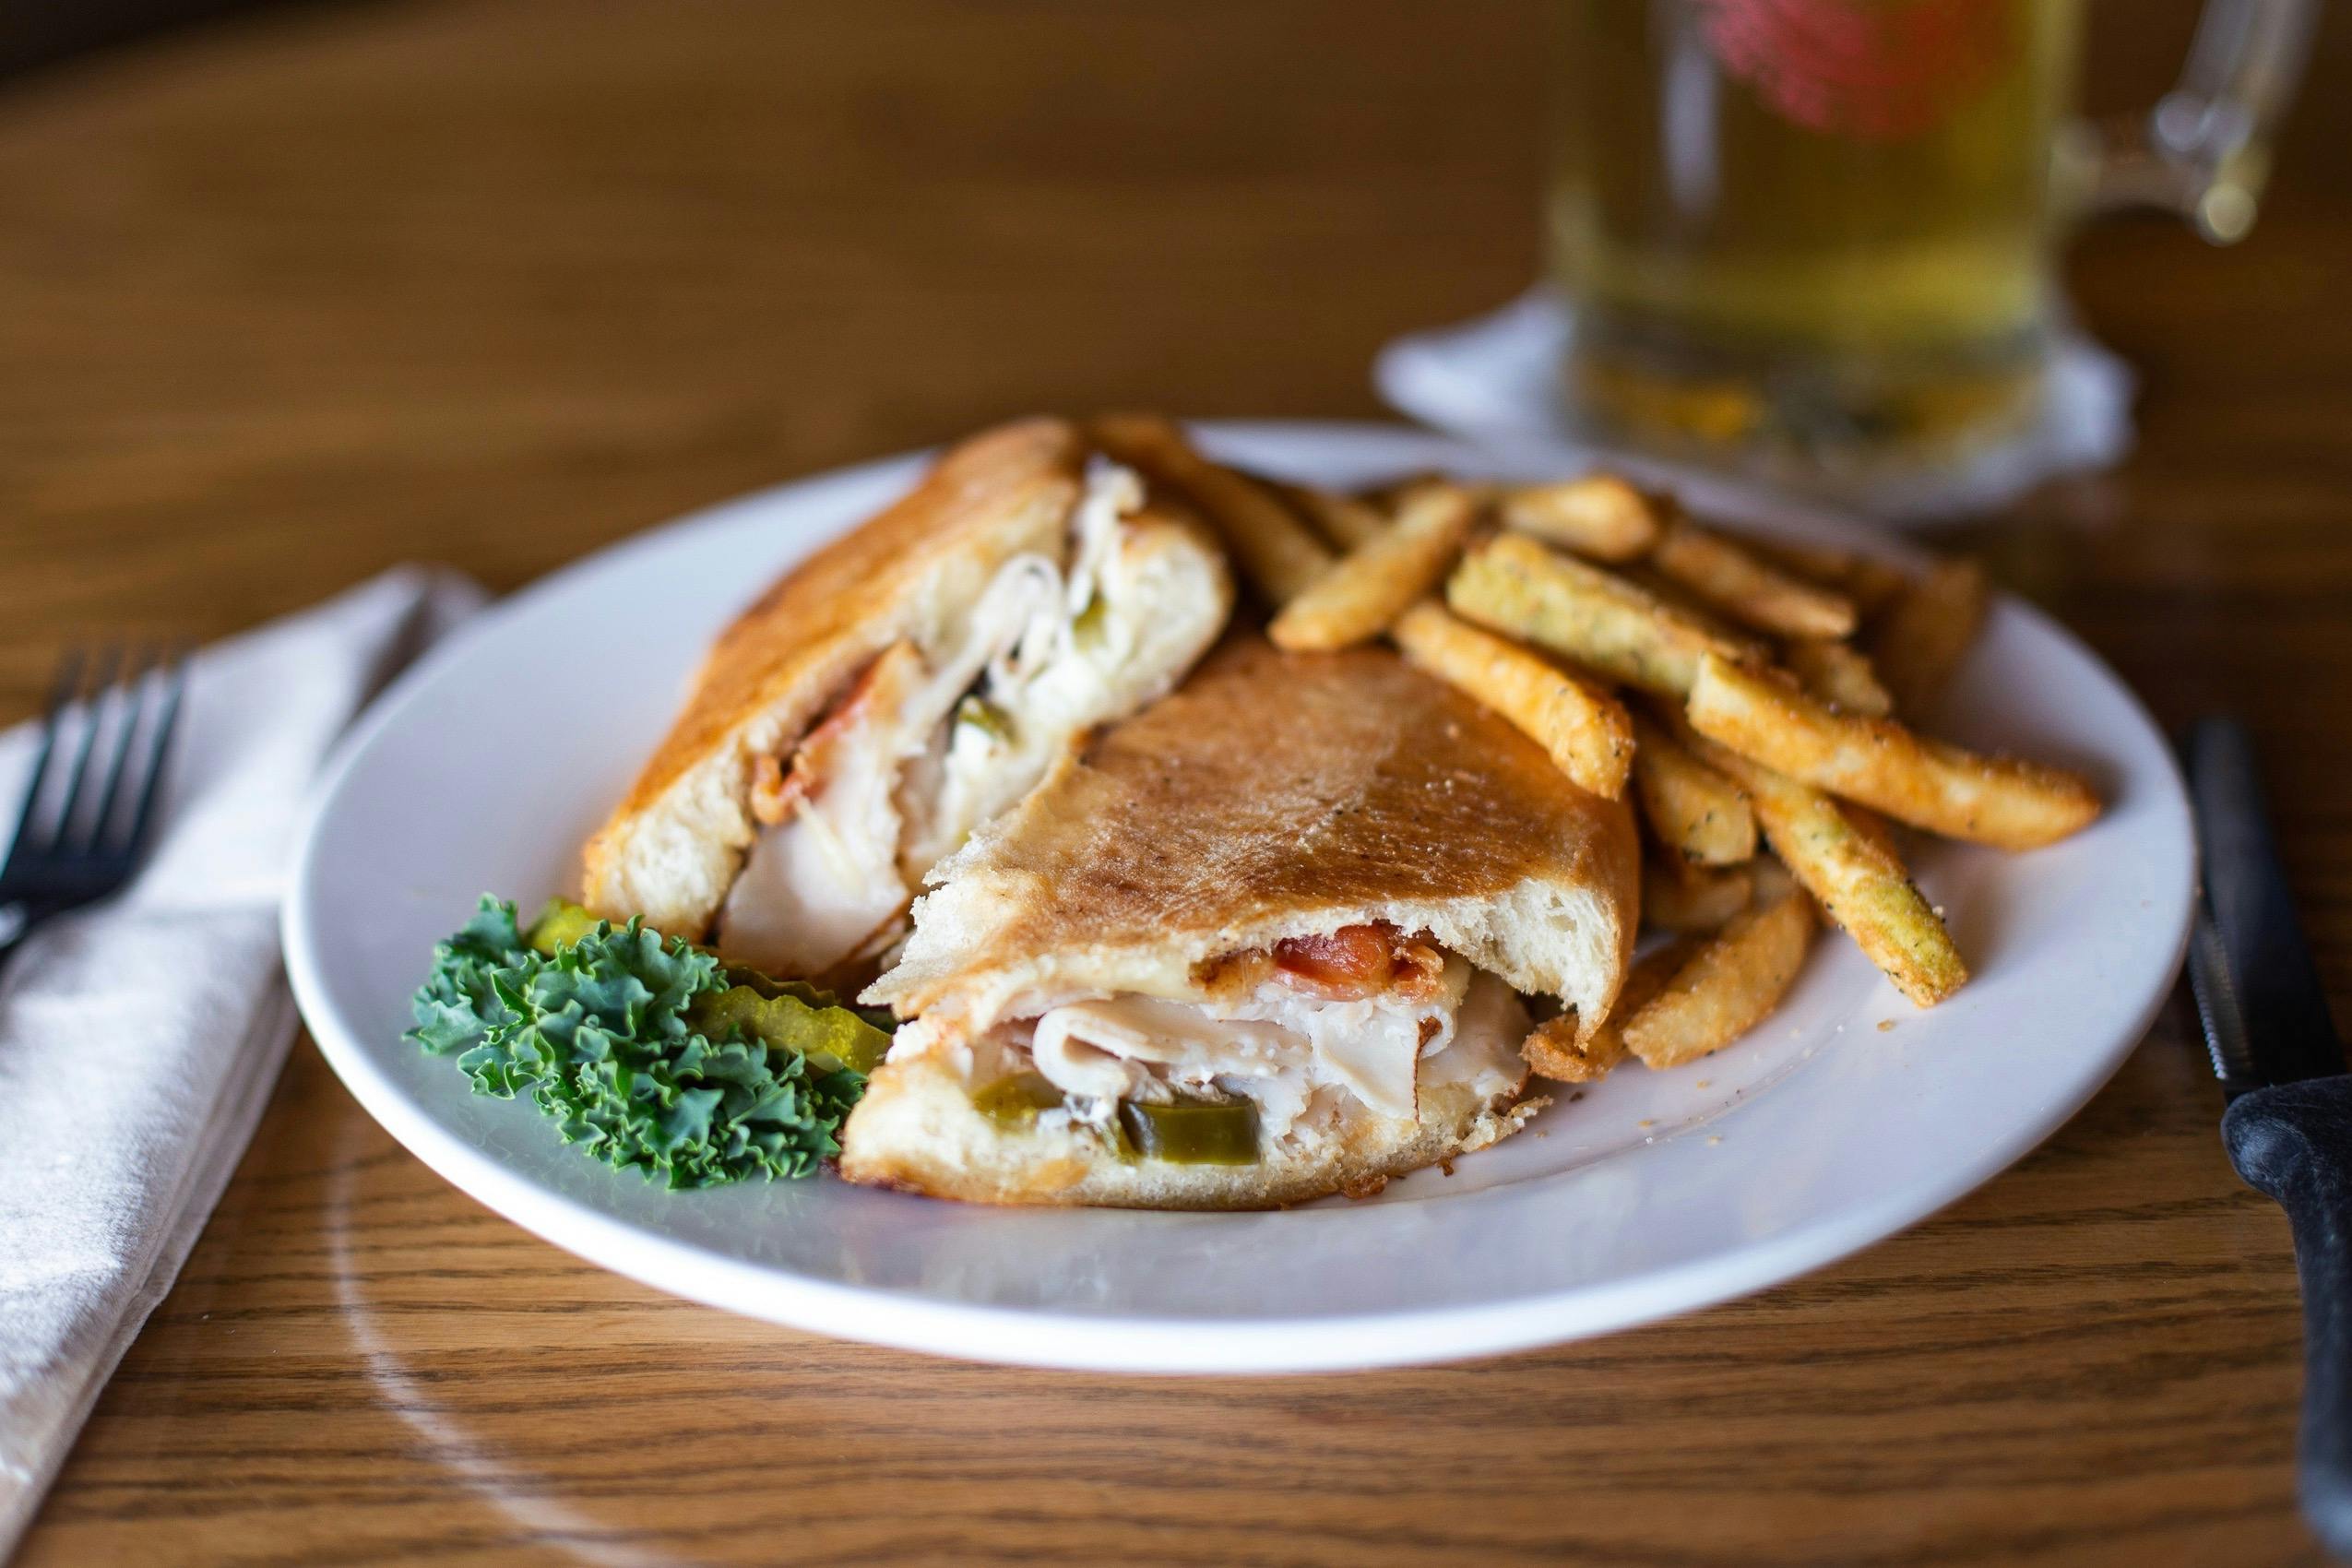 Twisted Turkey Club Sandwich from Set'em Up Jacks in Lawrence, KS